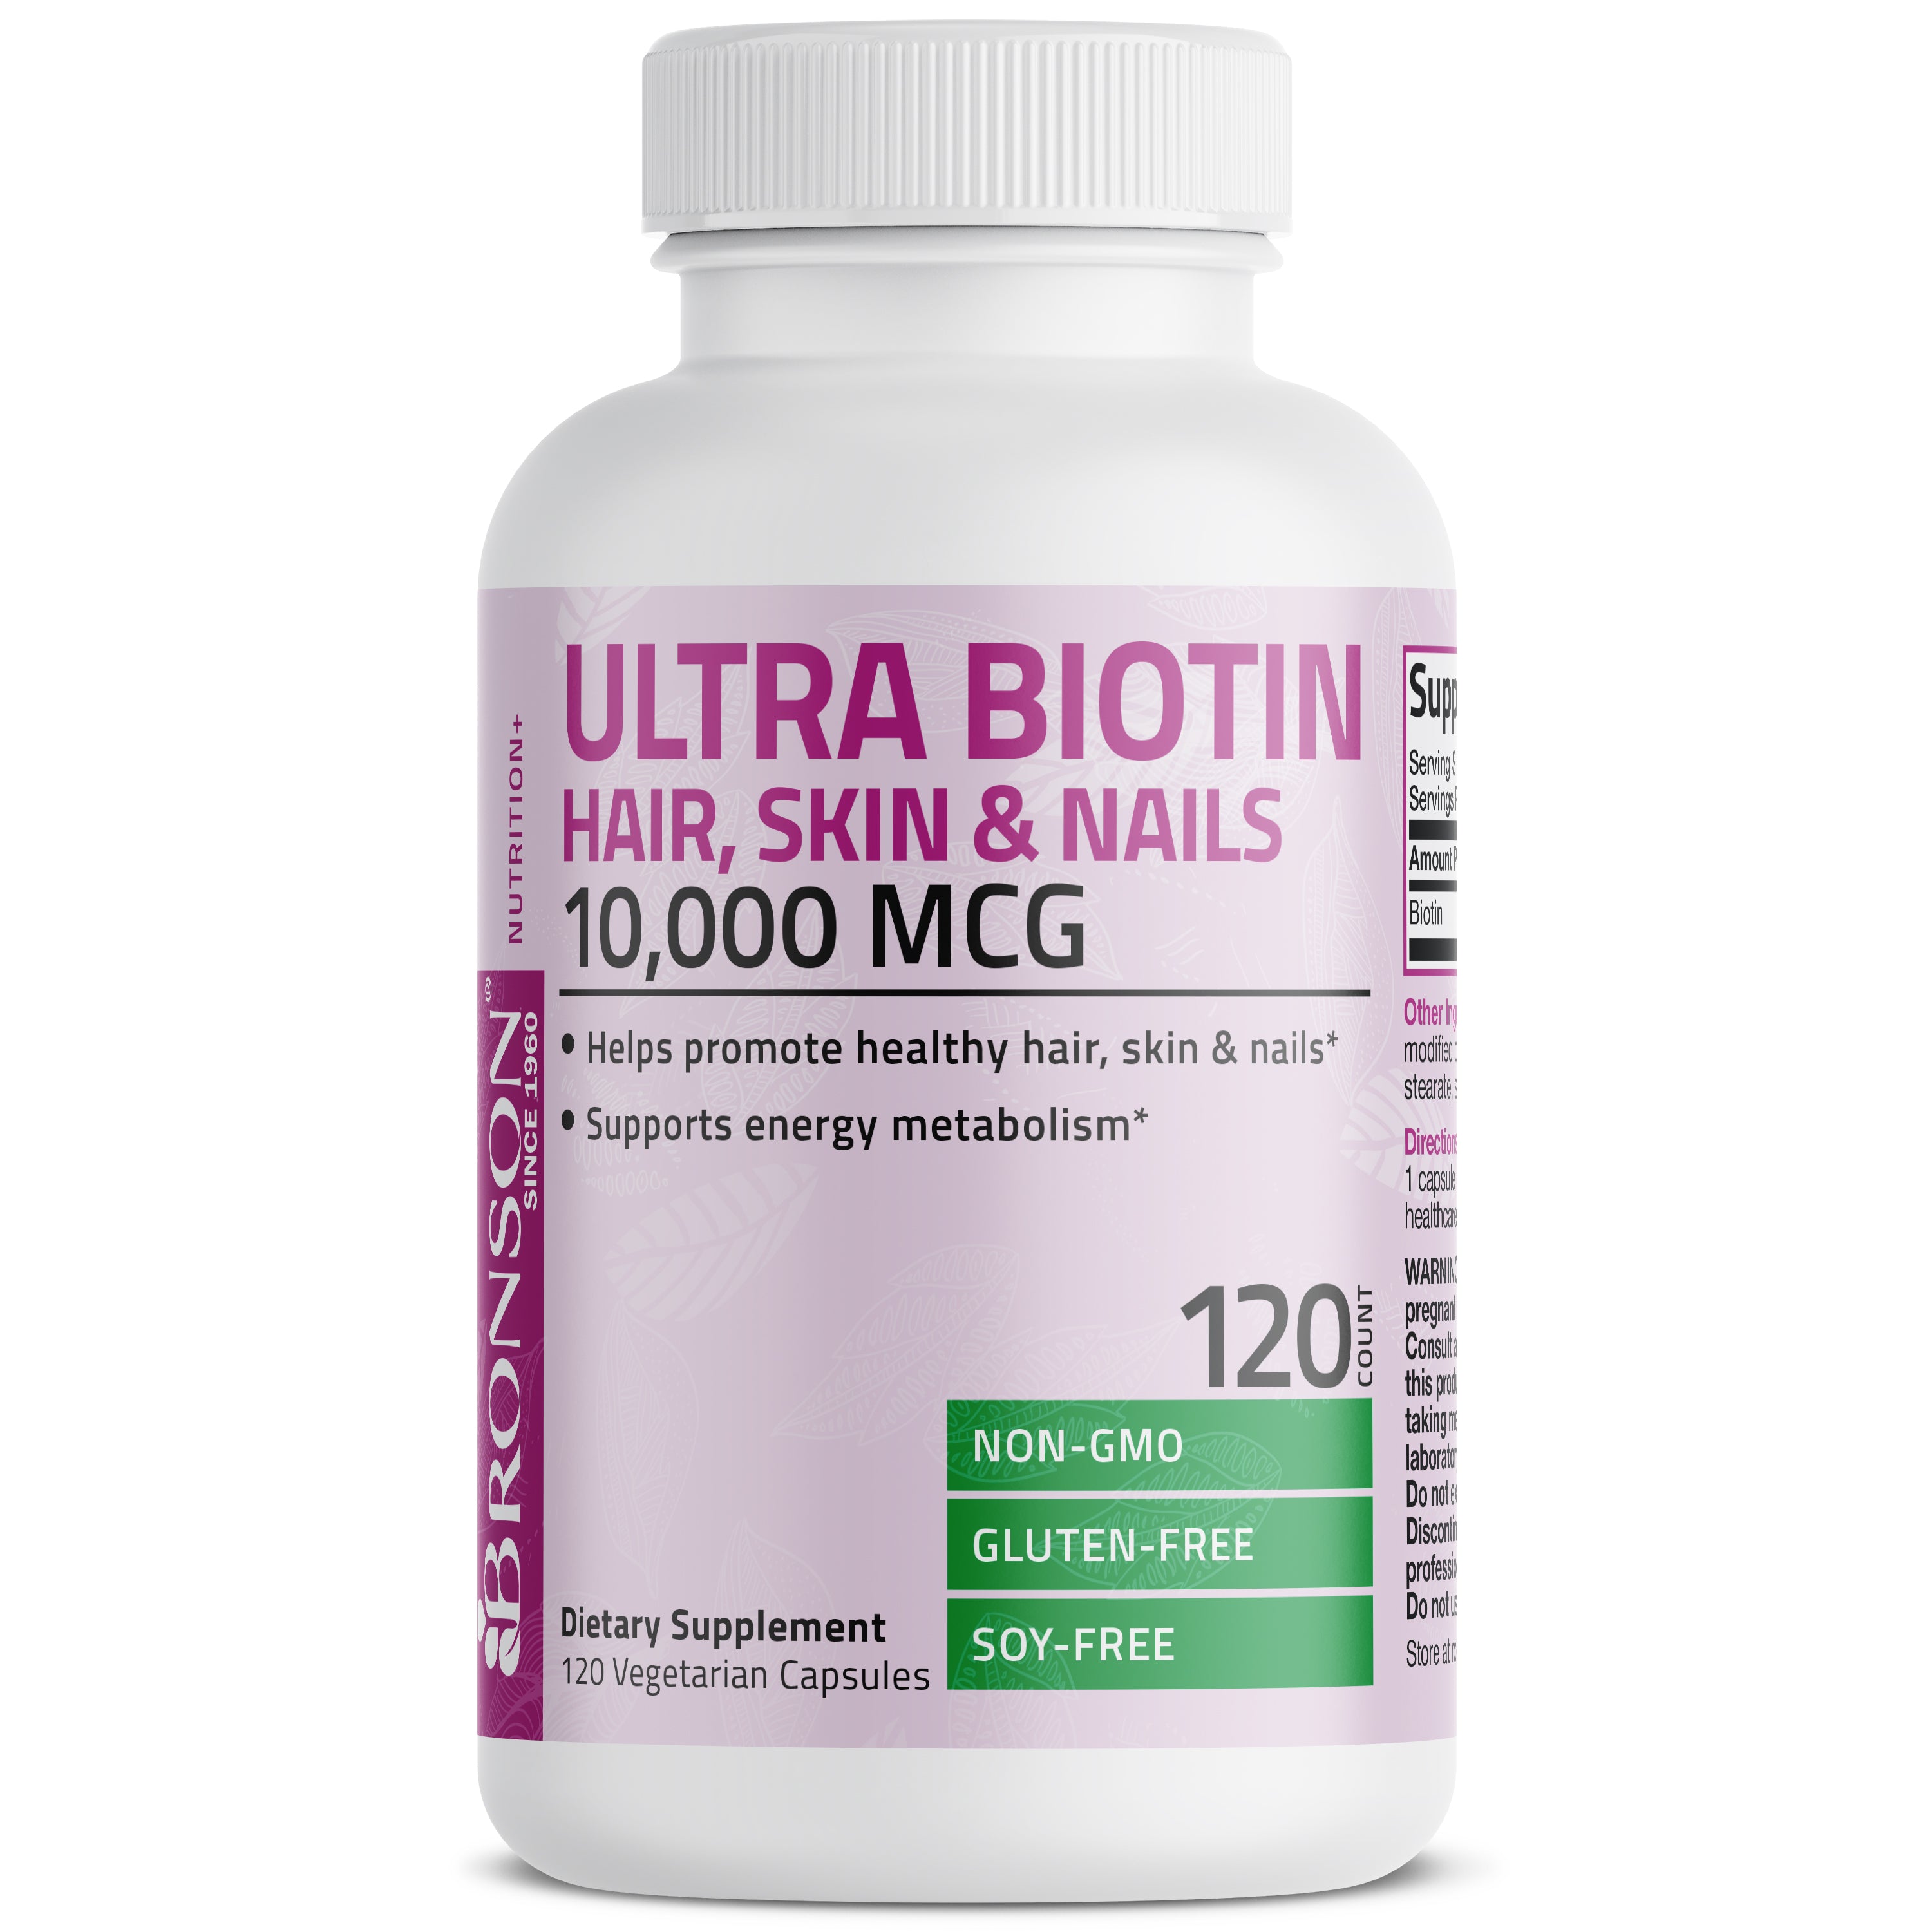 Ultra Biotin Hair, Skin & Nails - 10,000 mcg view 4 of 14